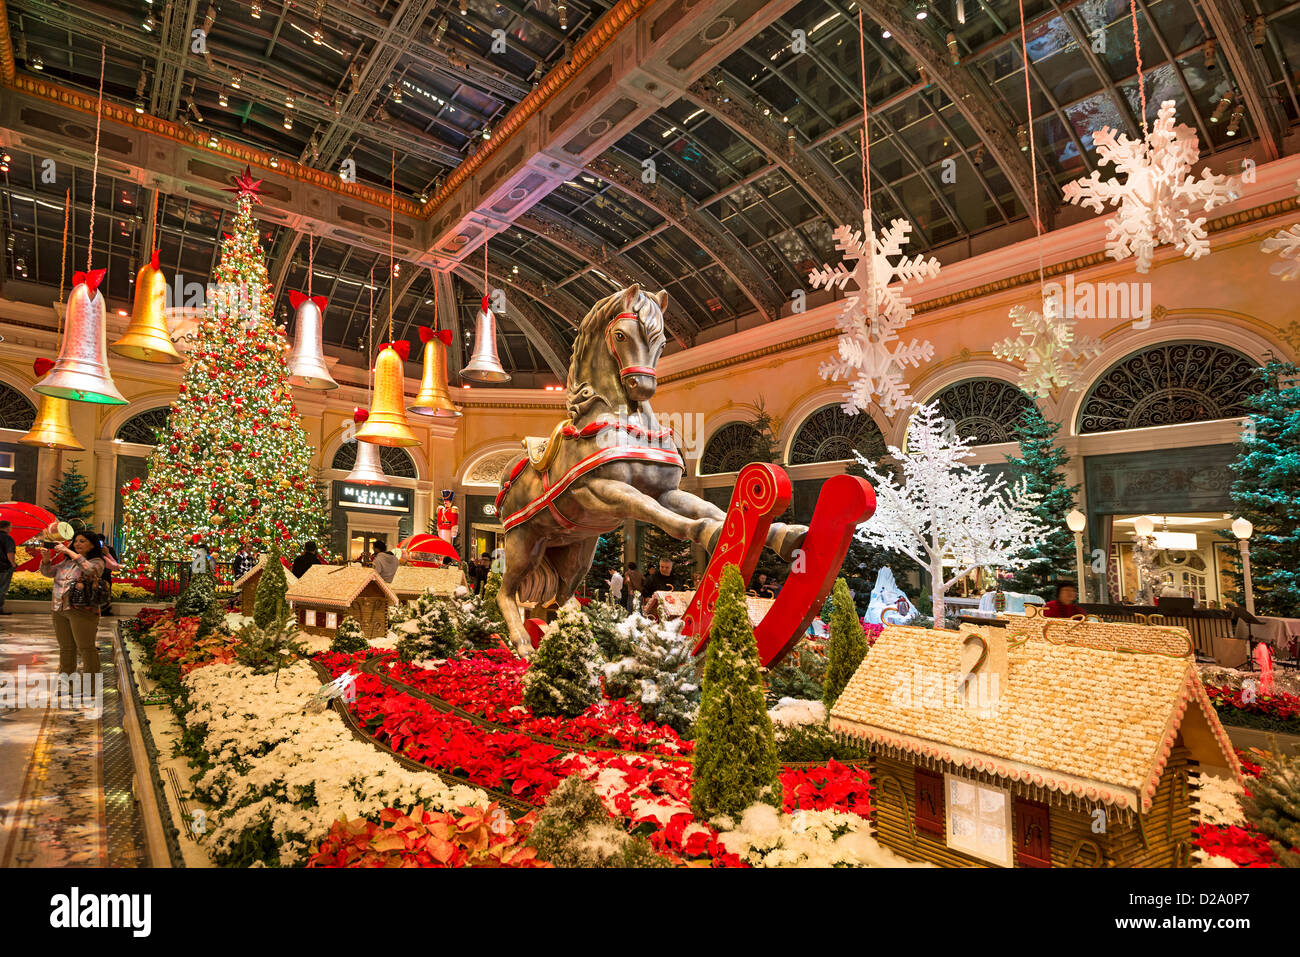 PHOTOS: Bellagio Conservatory unveils holiday display on Las Vegas Strip